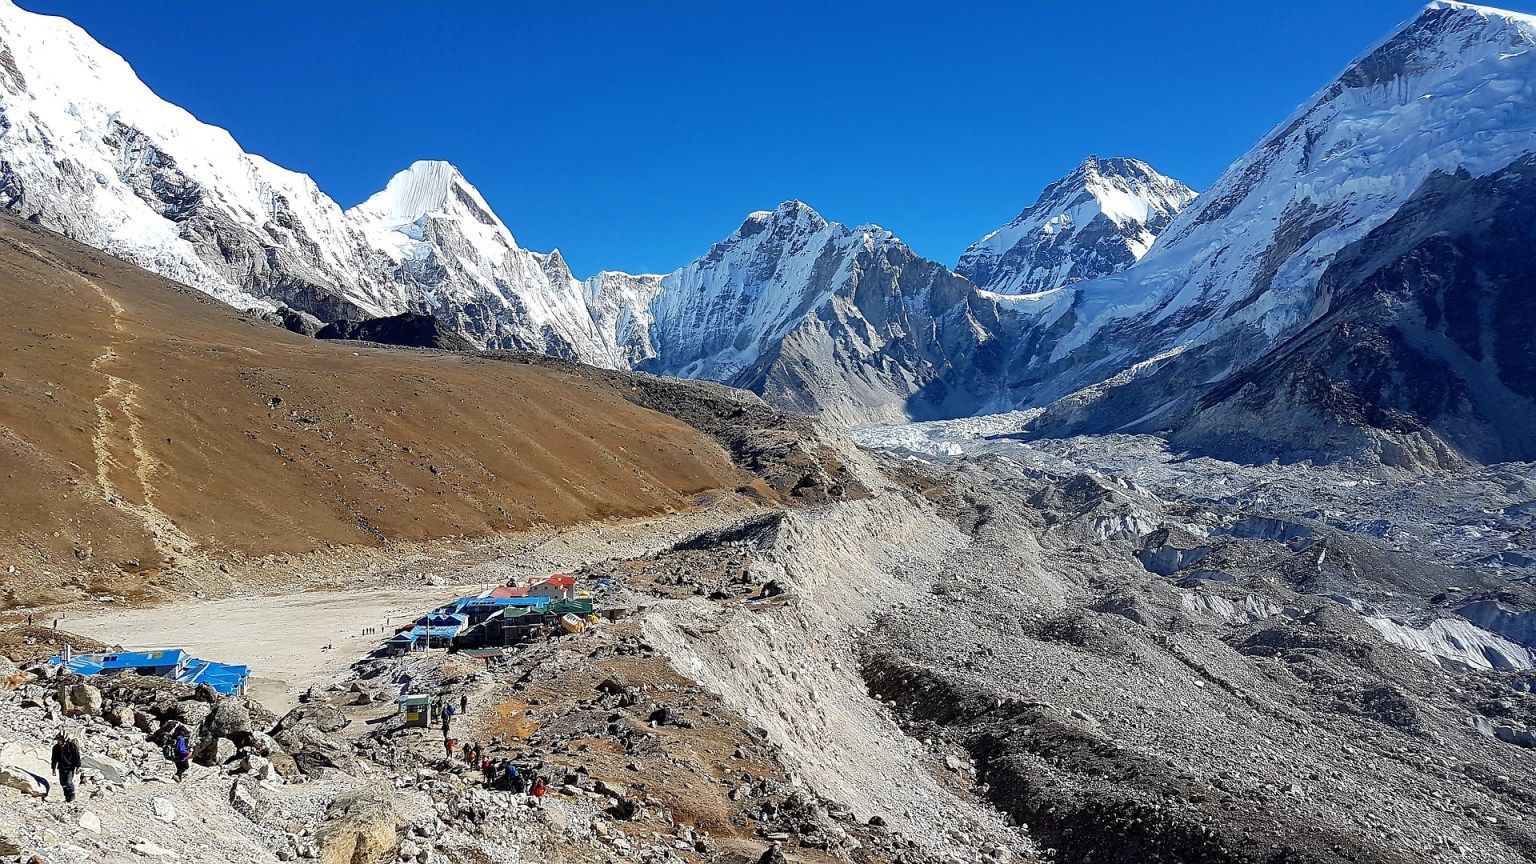 Top 10 Everest Base Camp Trek Agency